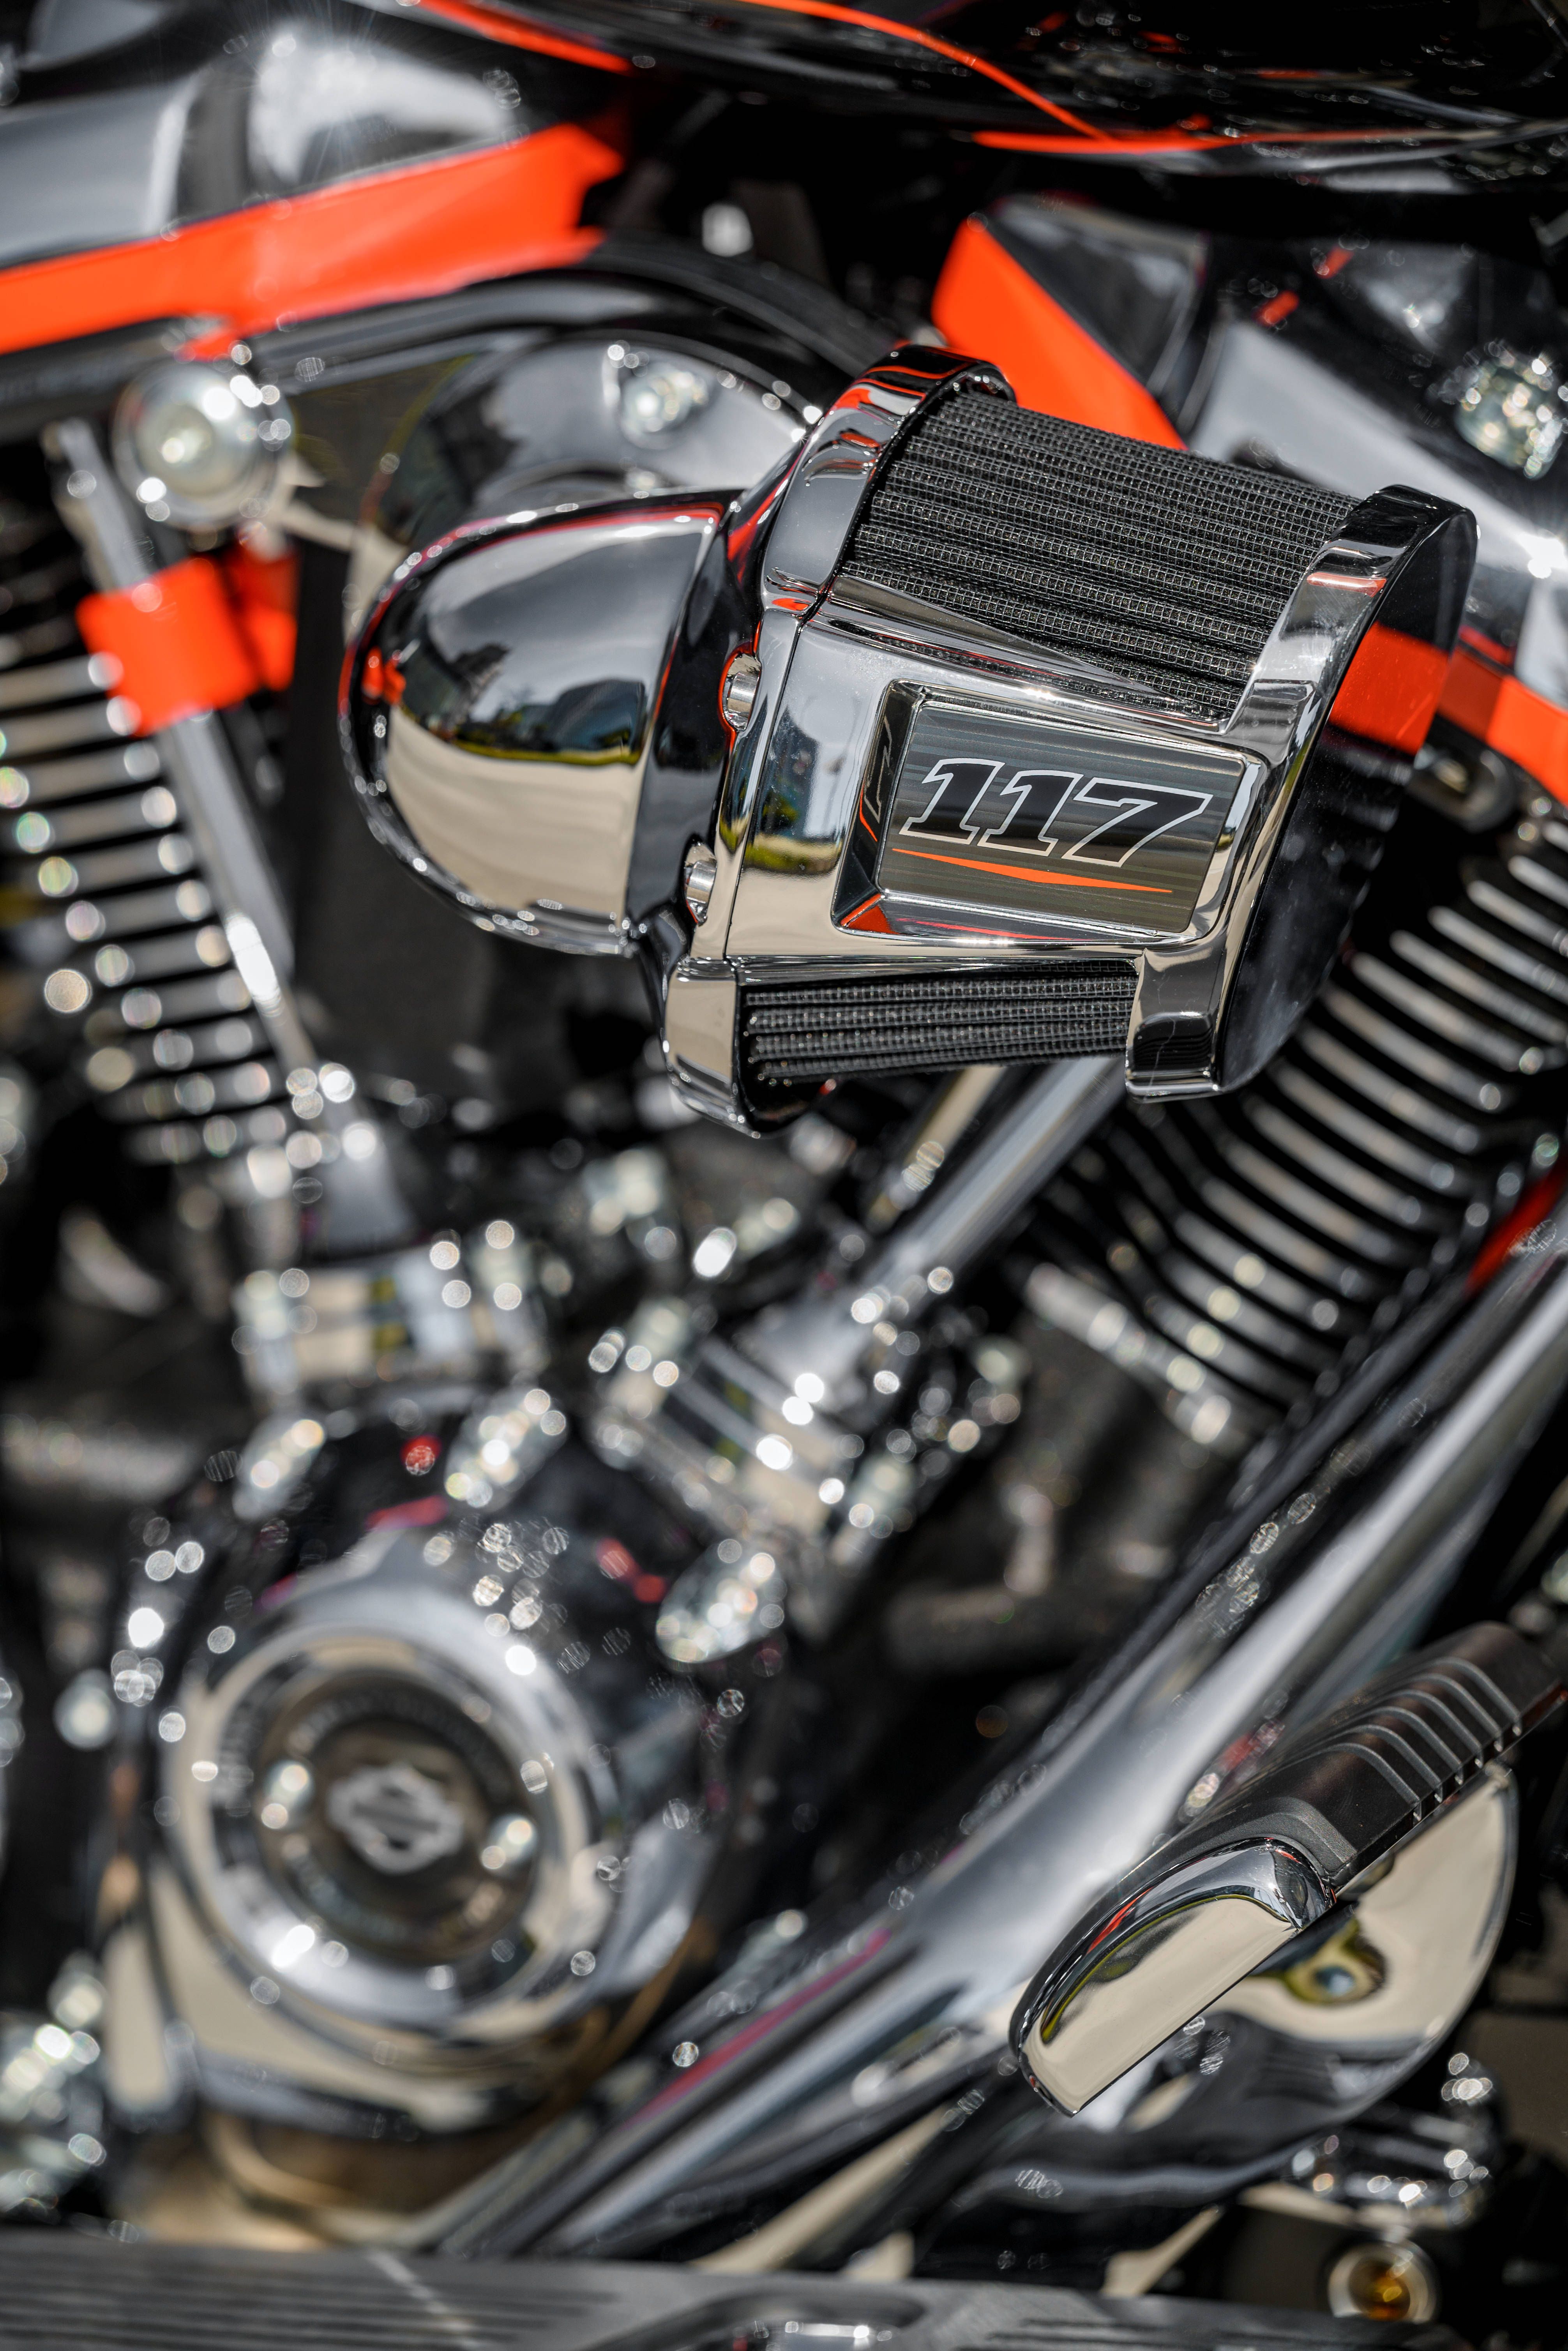 2021 - 2022 Harley-Davidson CVO Road Glide